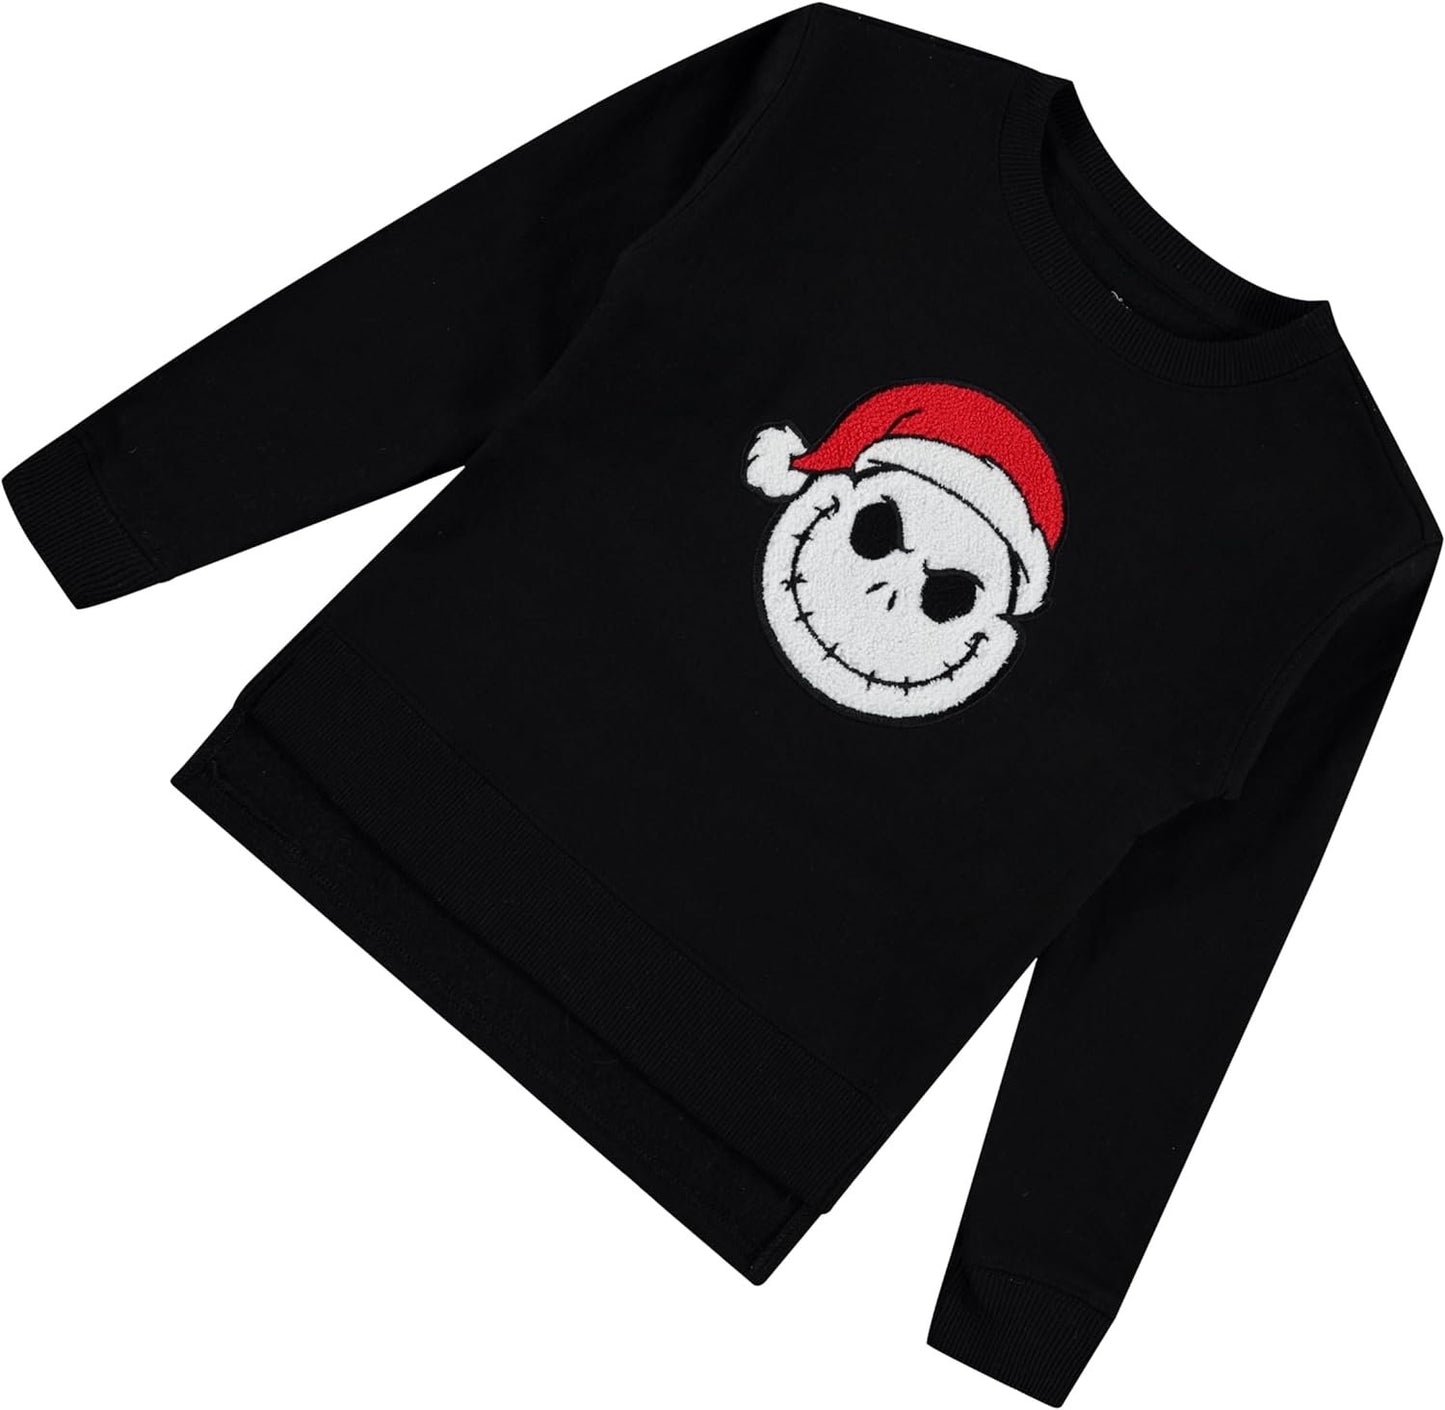 Disney Nightmare Before Christmas Pullover Sweatshirt - Big Girl Sizes 7-16